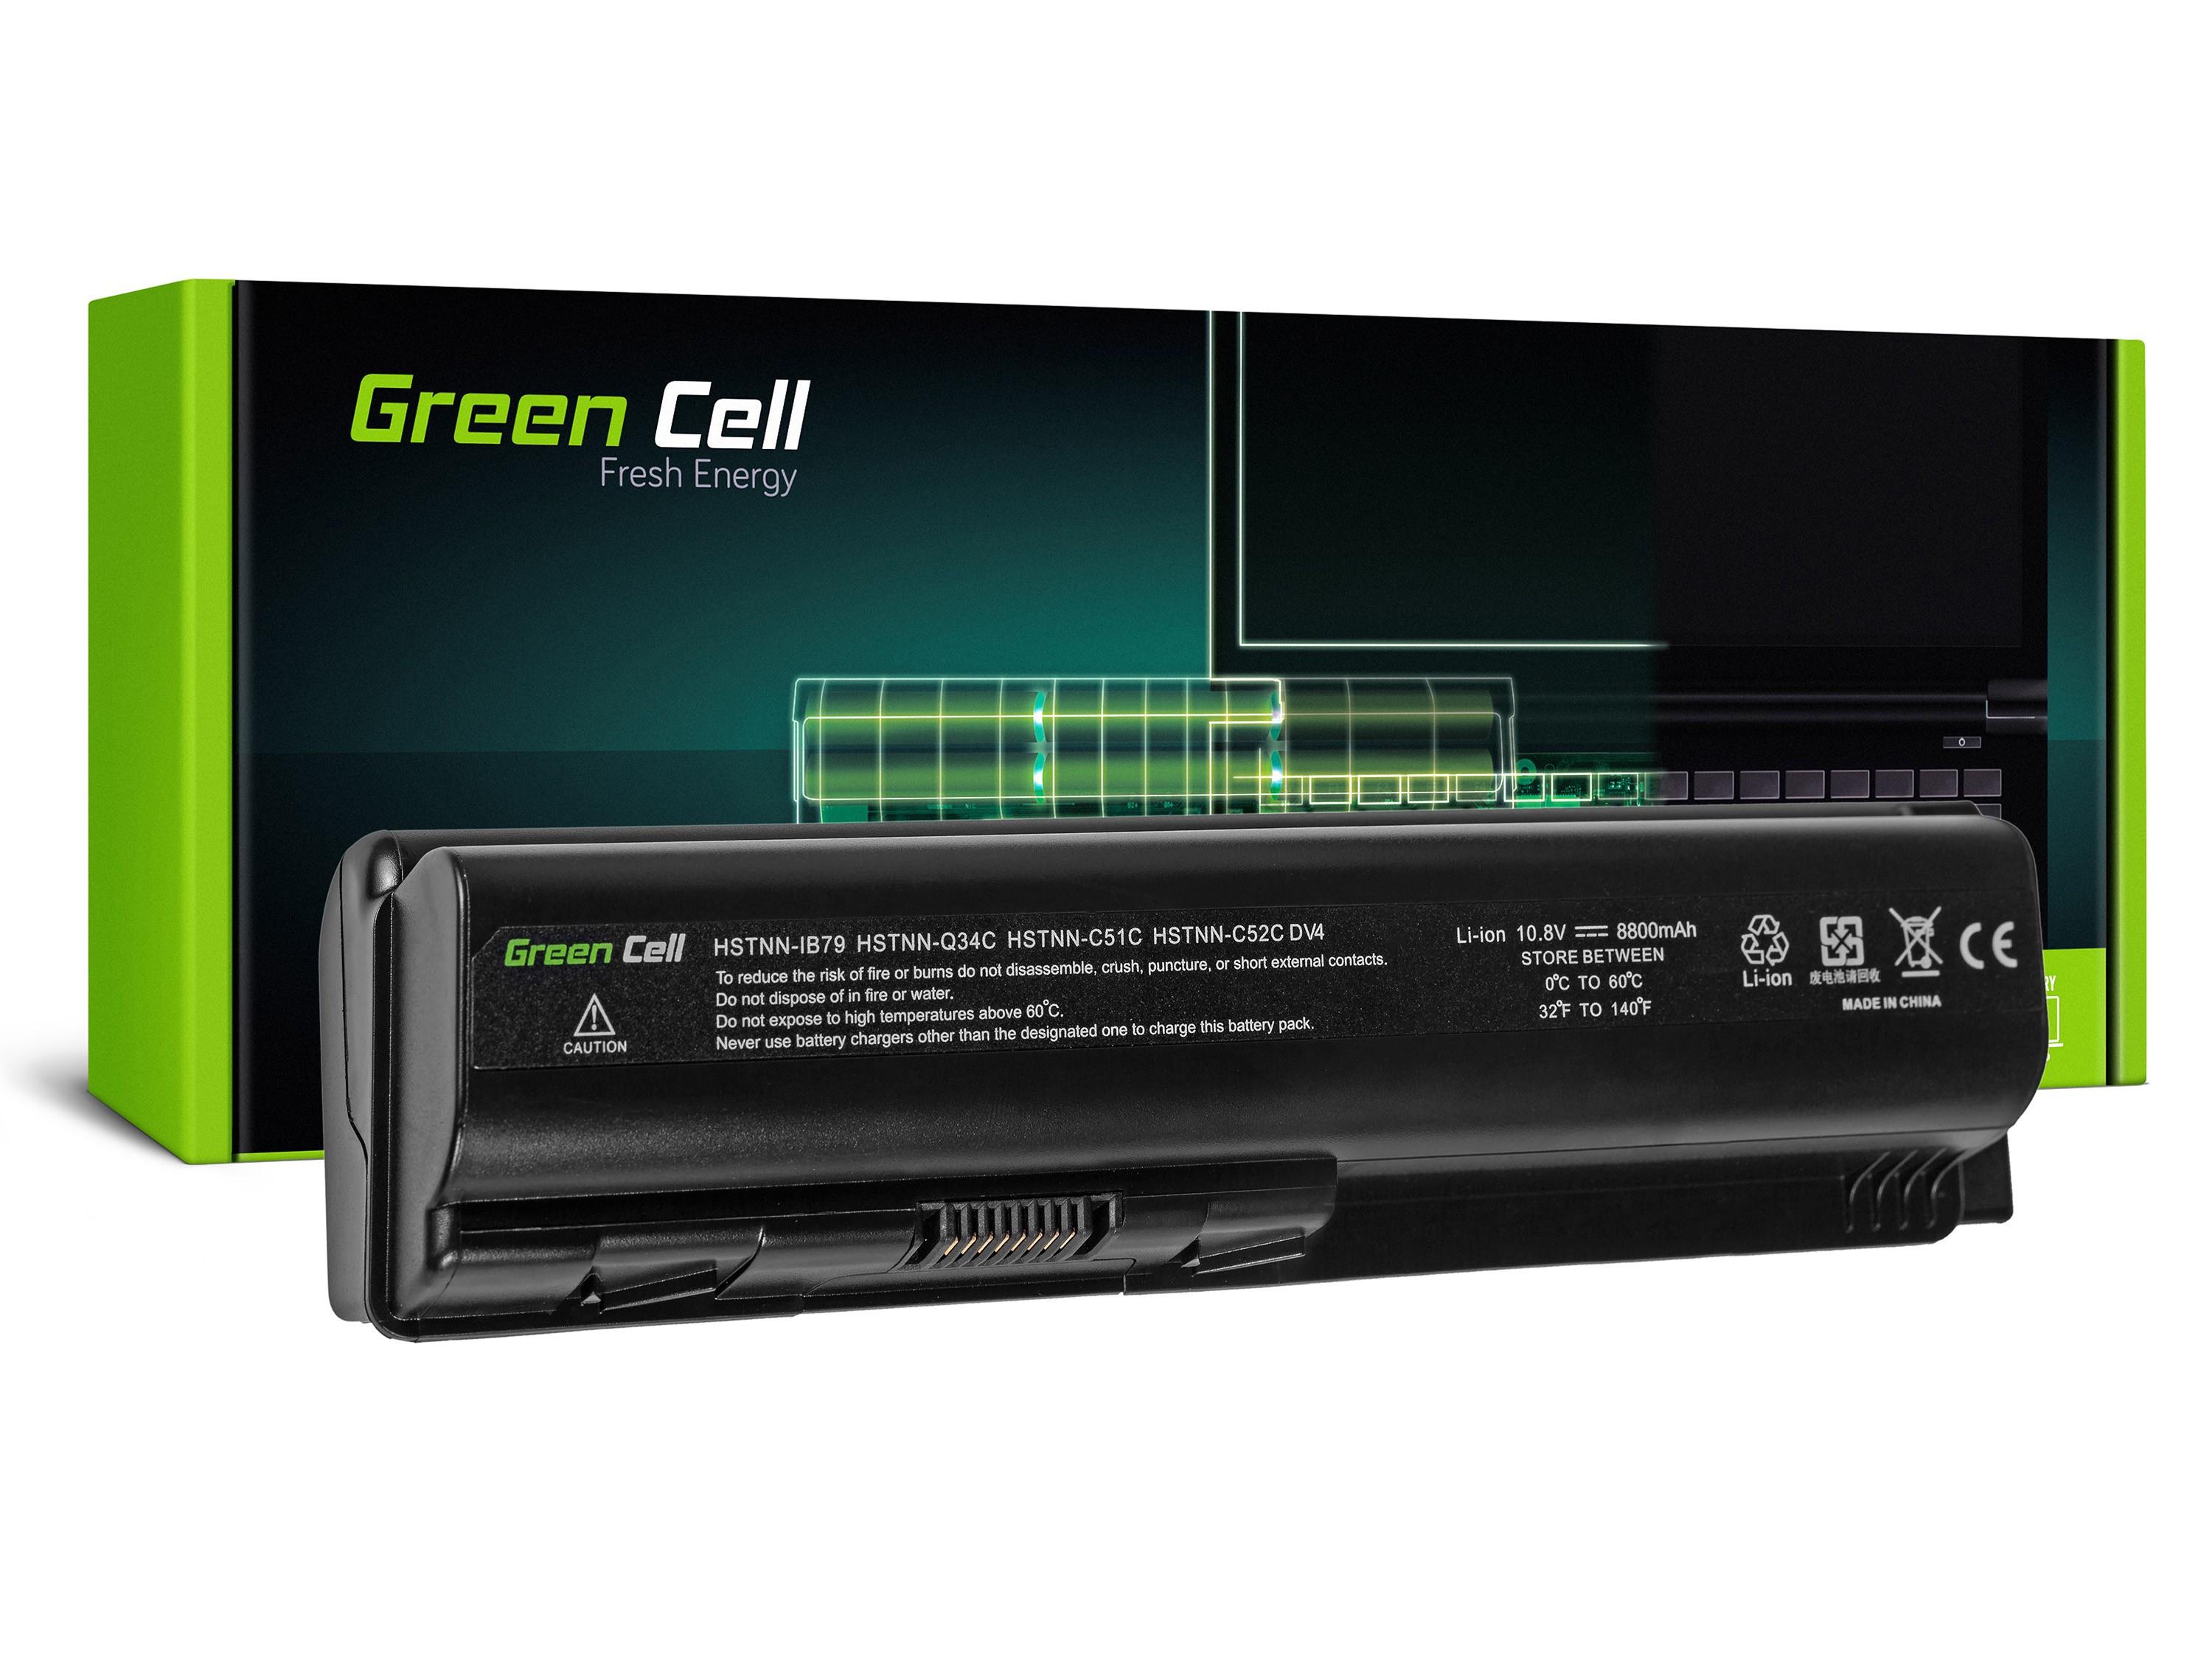 Green Cell Baterie Green Cell pro HP Pavilion Compaq Presario z serii DV4 DV5 DV6 CQ60 CQ70 10.8V 12 cell HP02